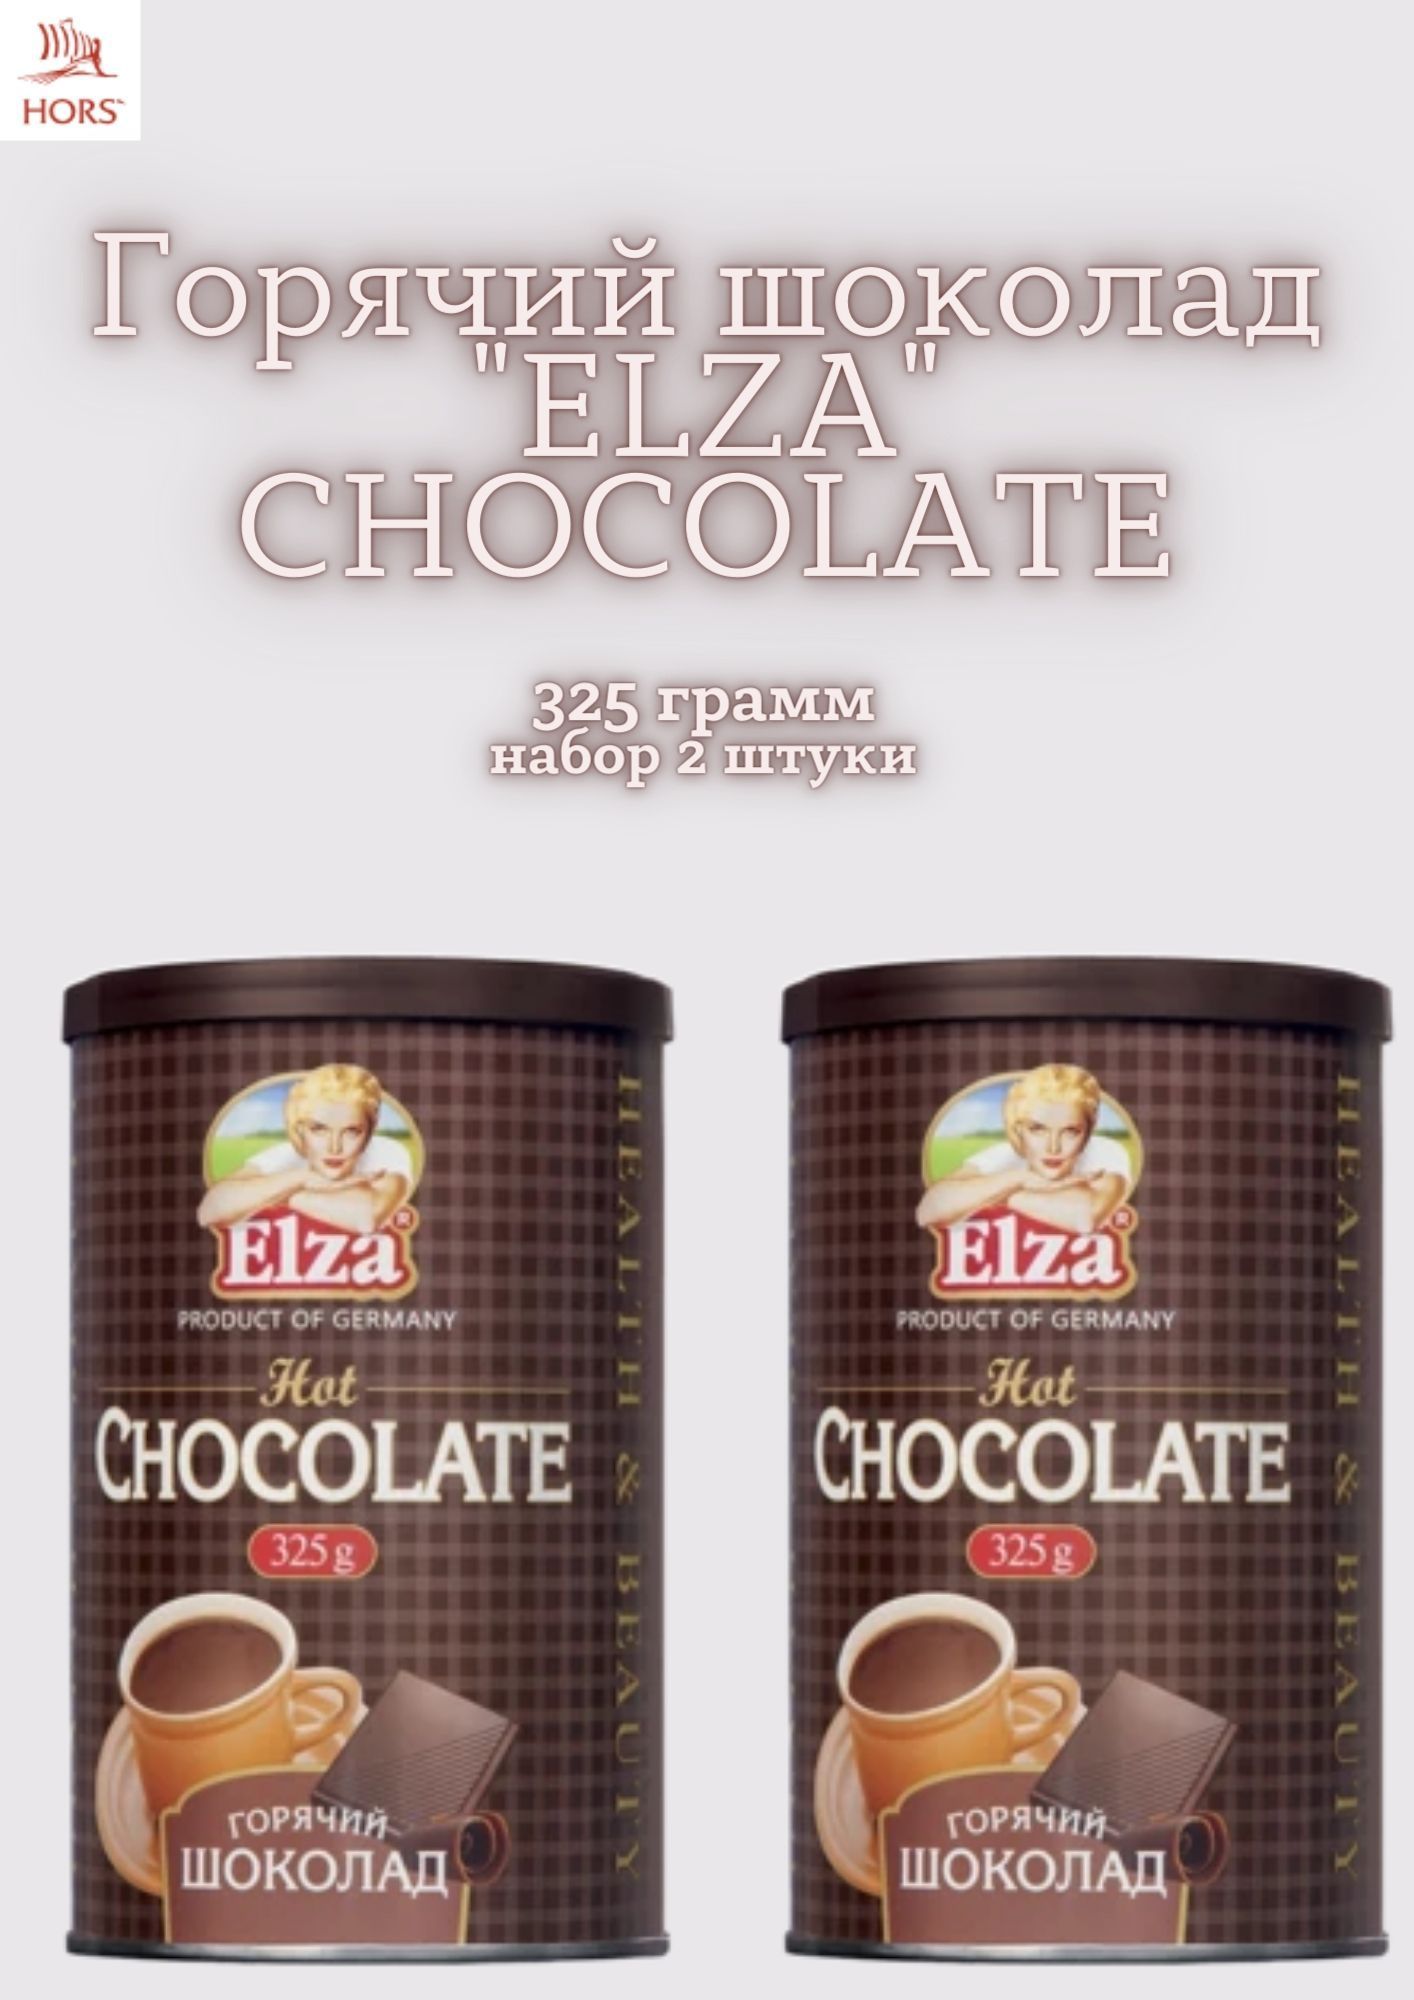 Горячий шоколад Elza горячий шоколад растворимый, 325 г, Германия. Горячий шоколад Elza, 325 гр. Горячий шоколад elza